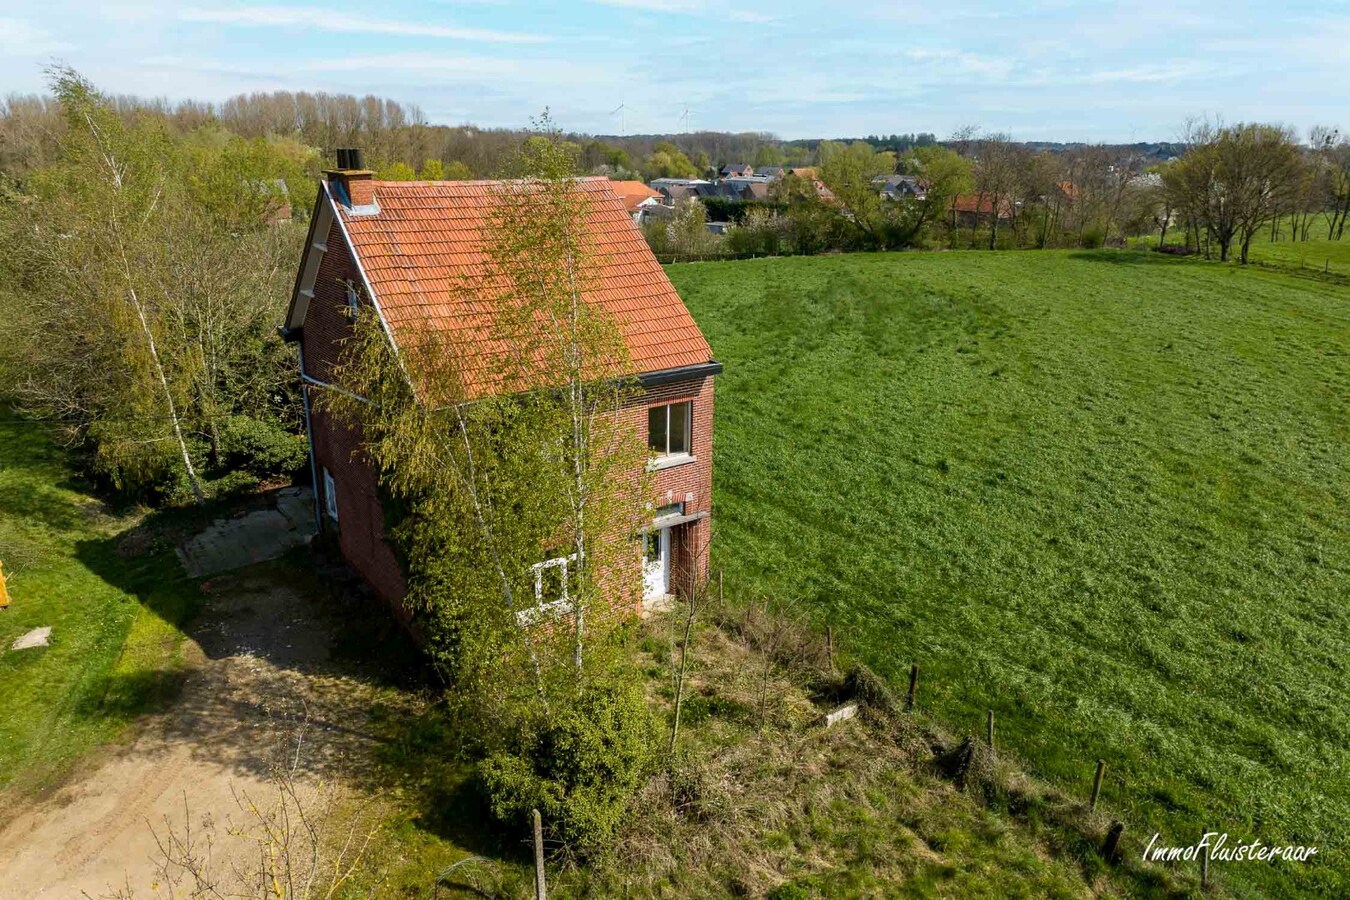 Property sold in Tielt-Winge